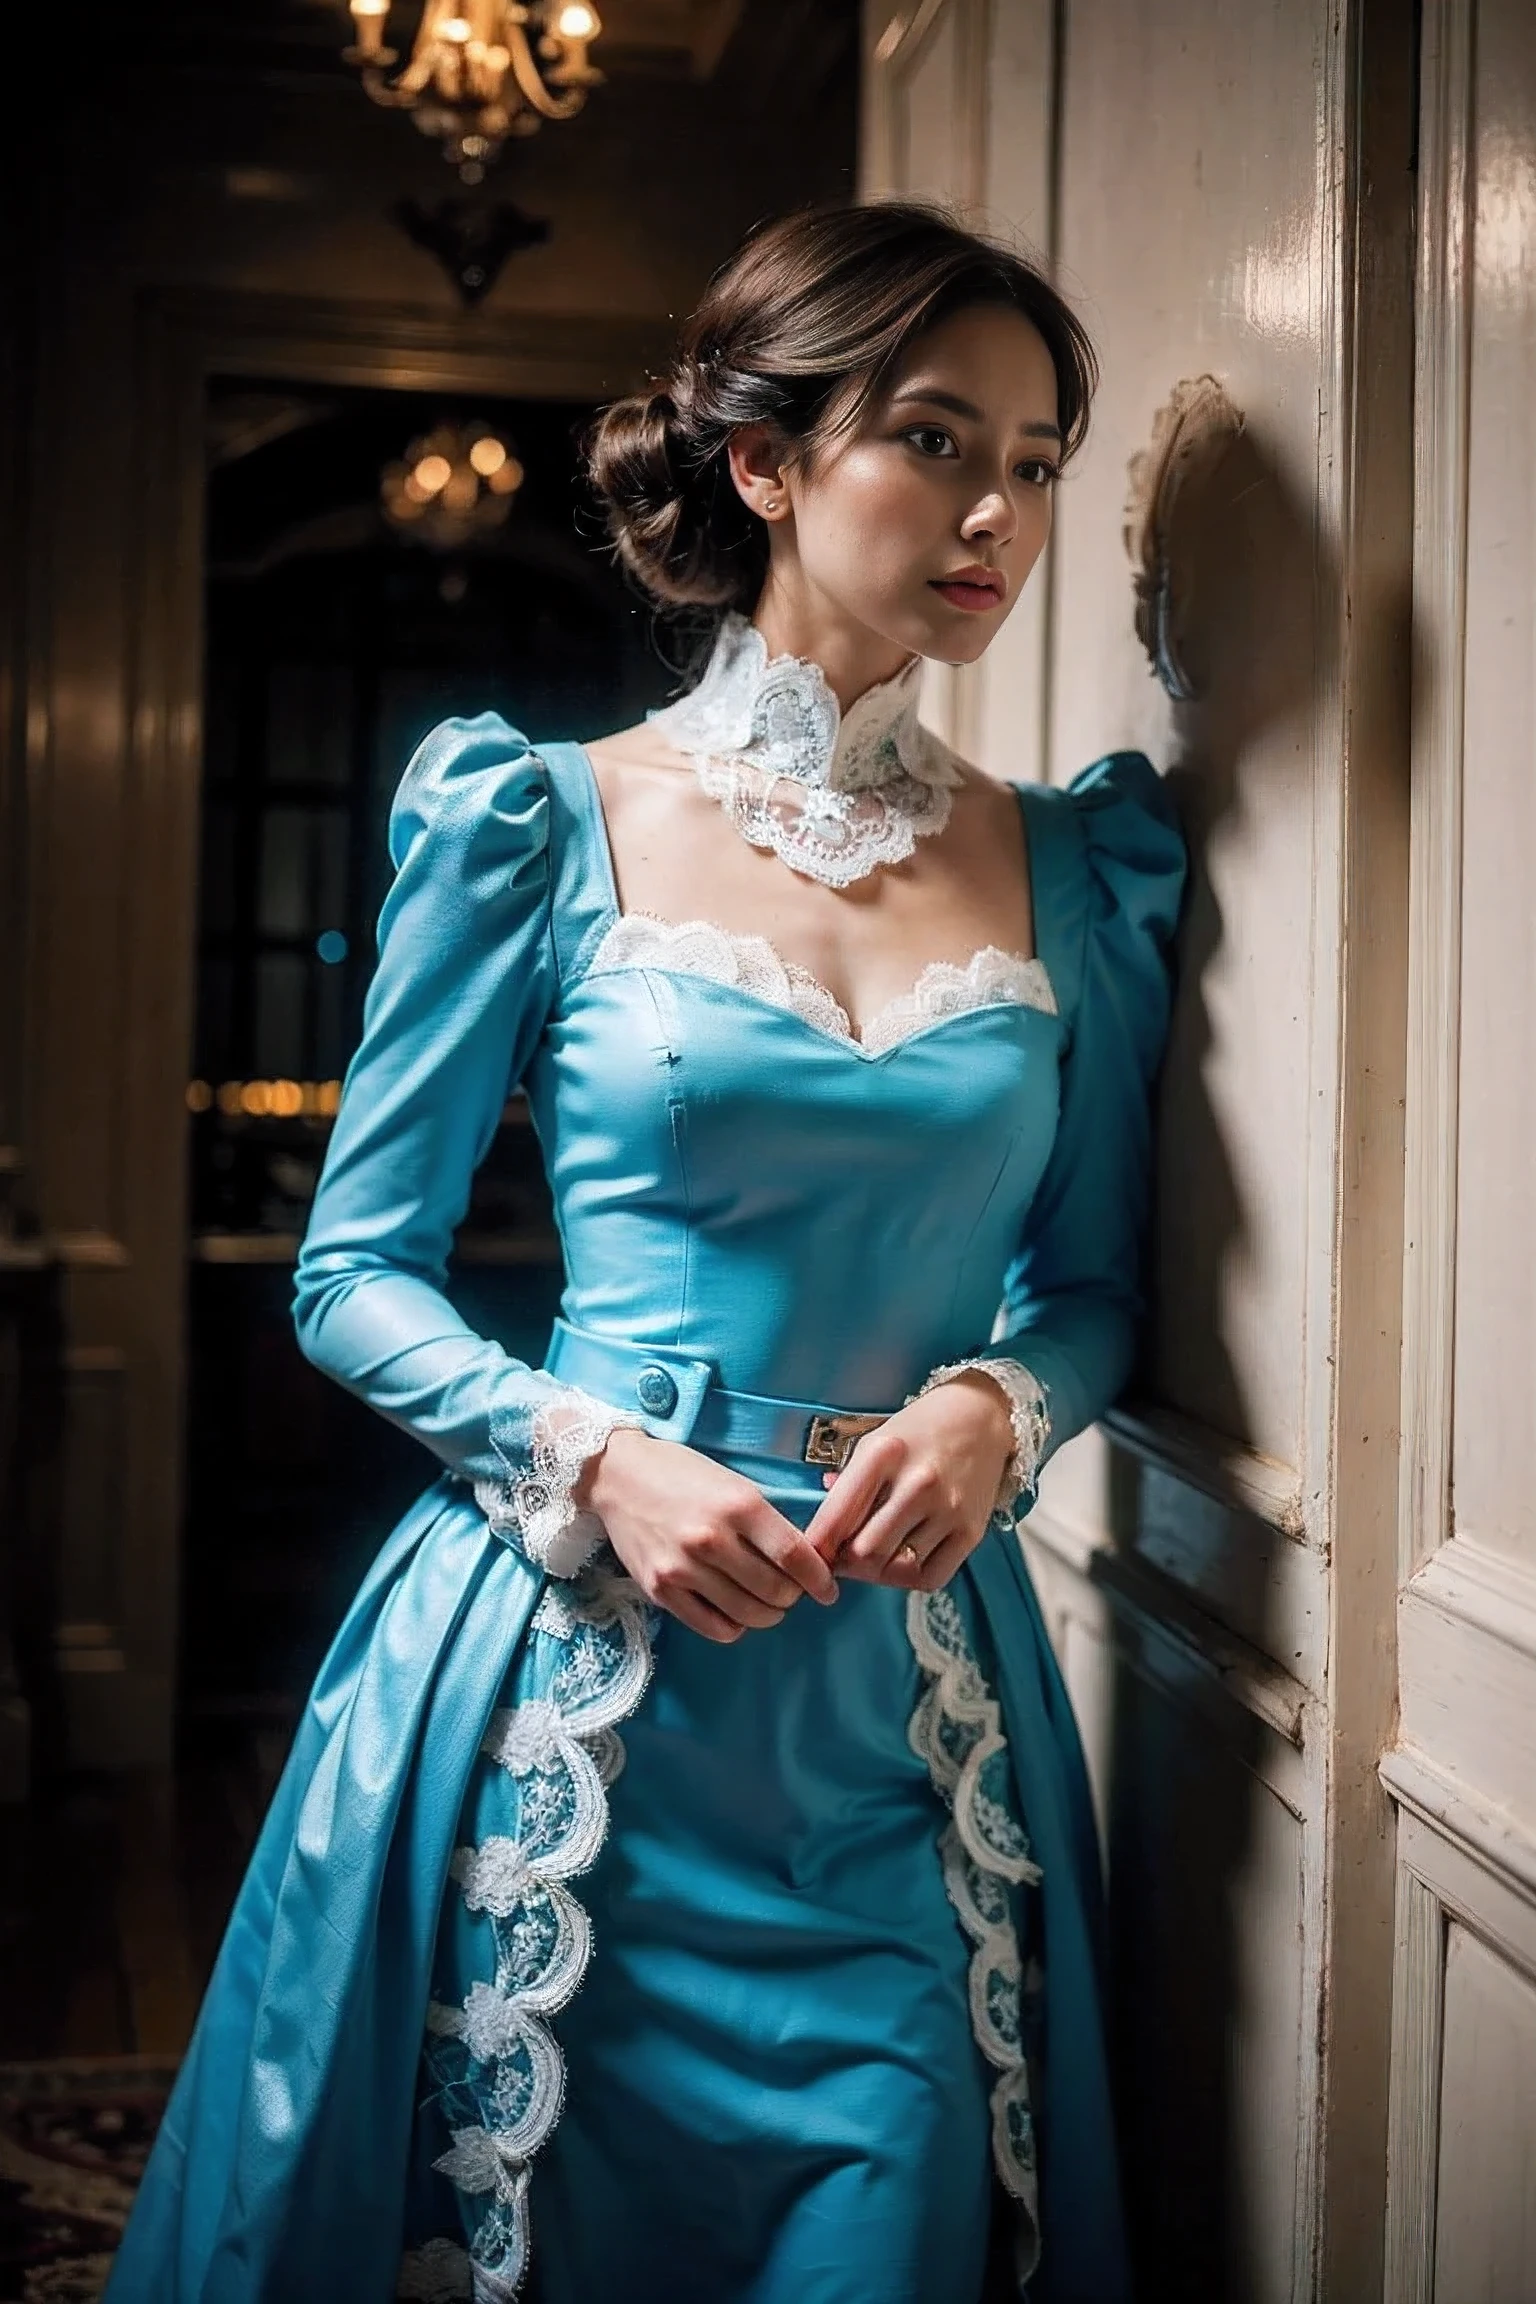 Realistic photography, Modern Victorian dress of beautiful woman